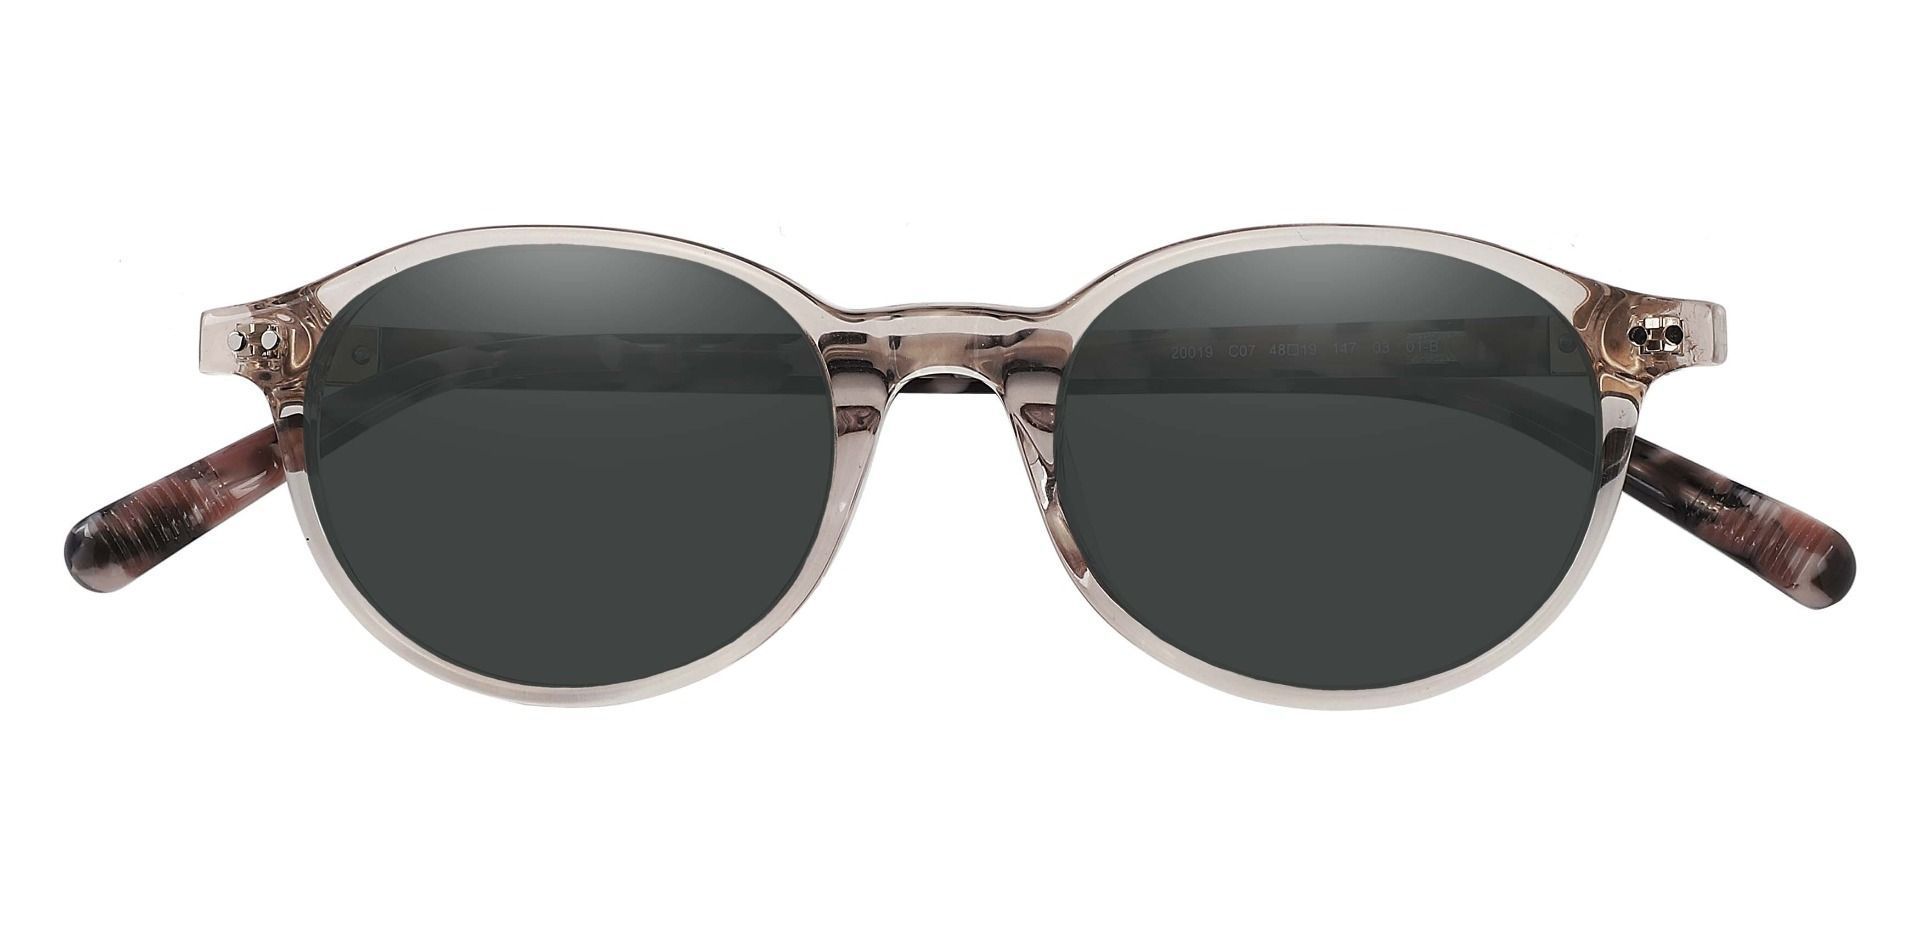 Avon Oval Prescription Sunglasses - Clear Frame With Gray Lenses